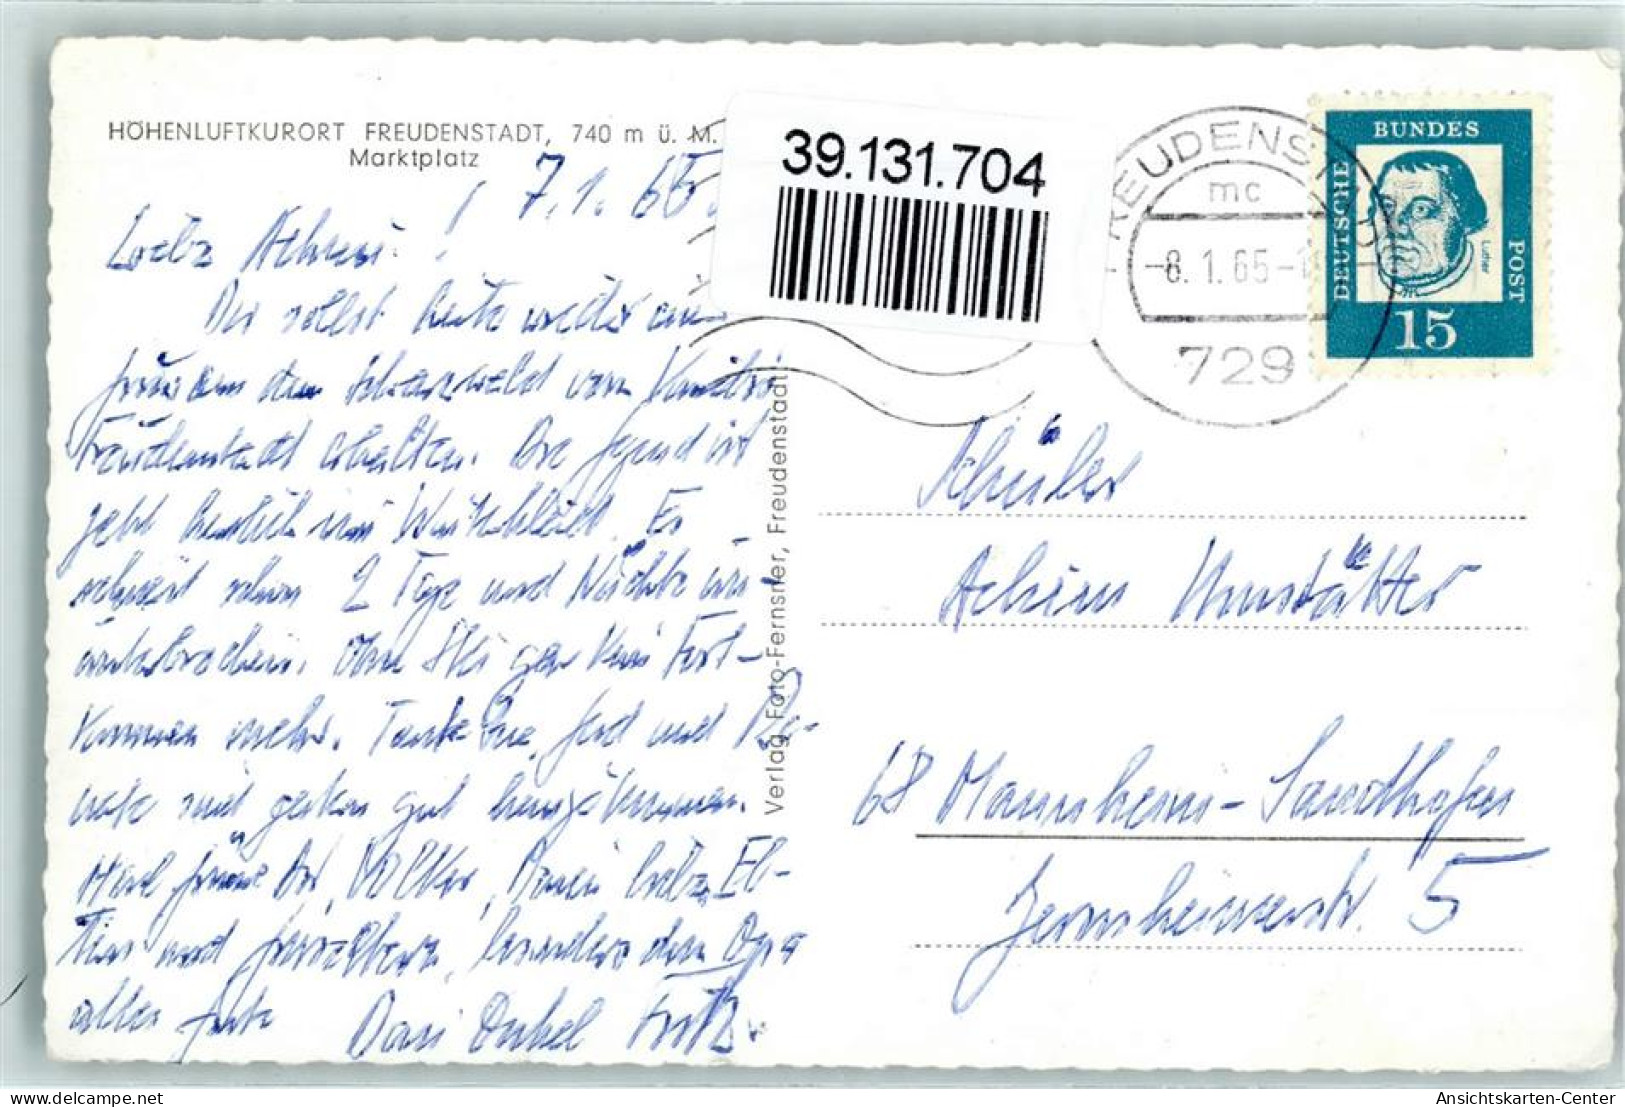 39131704 - Freudenstadt - Freudenstadt